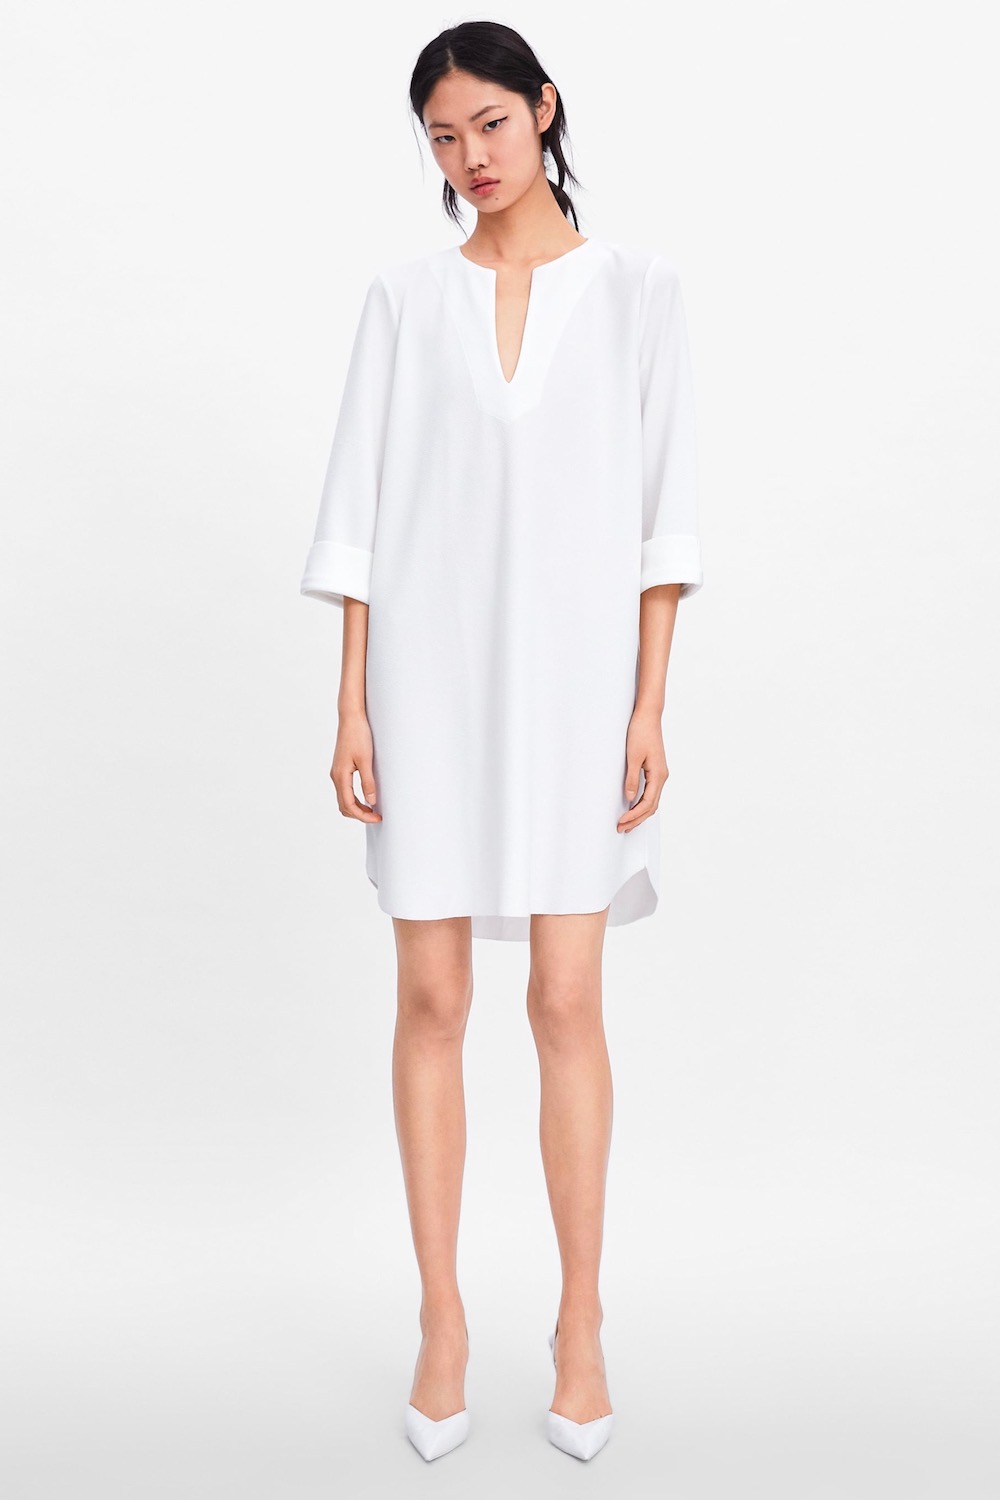 21 White Dresses for Summer 2019 - theFashionSpot